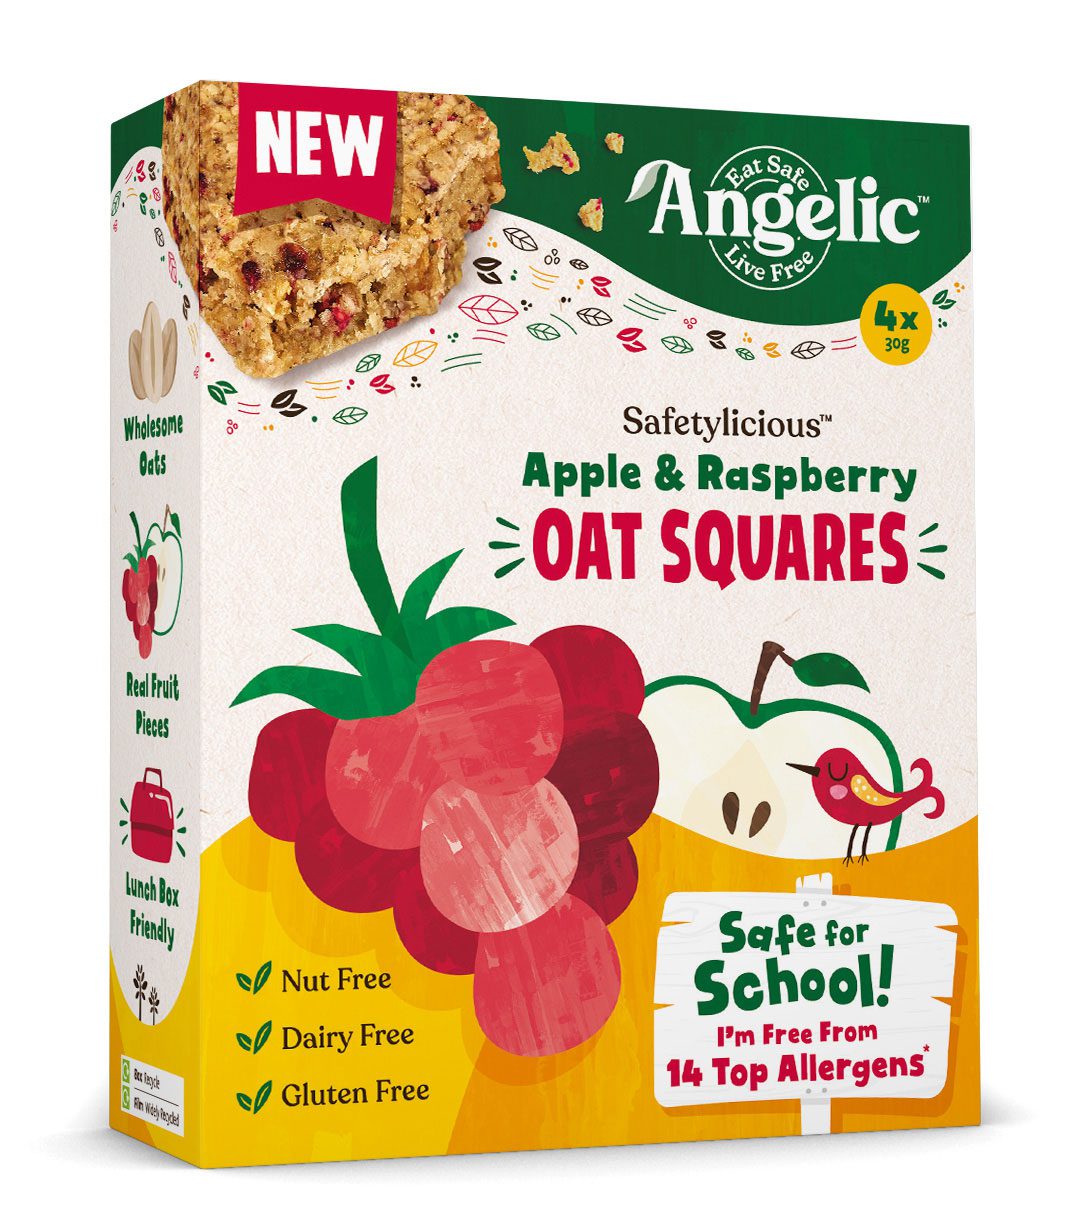 The Angelic Apple & Raspberry Oat Squares.